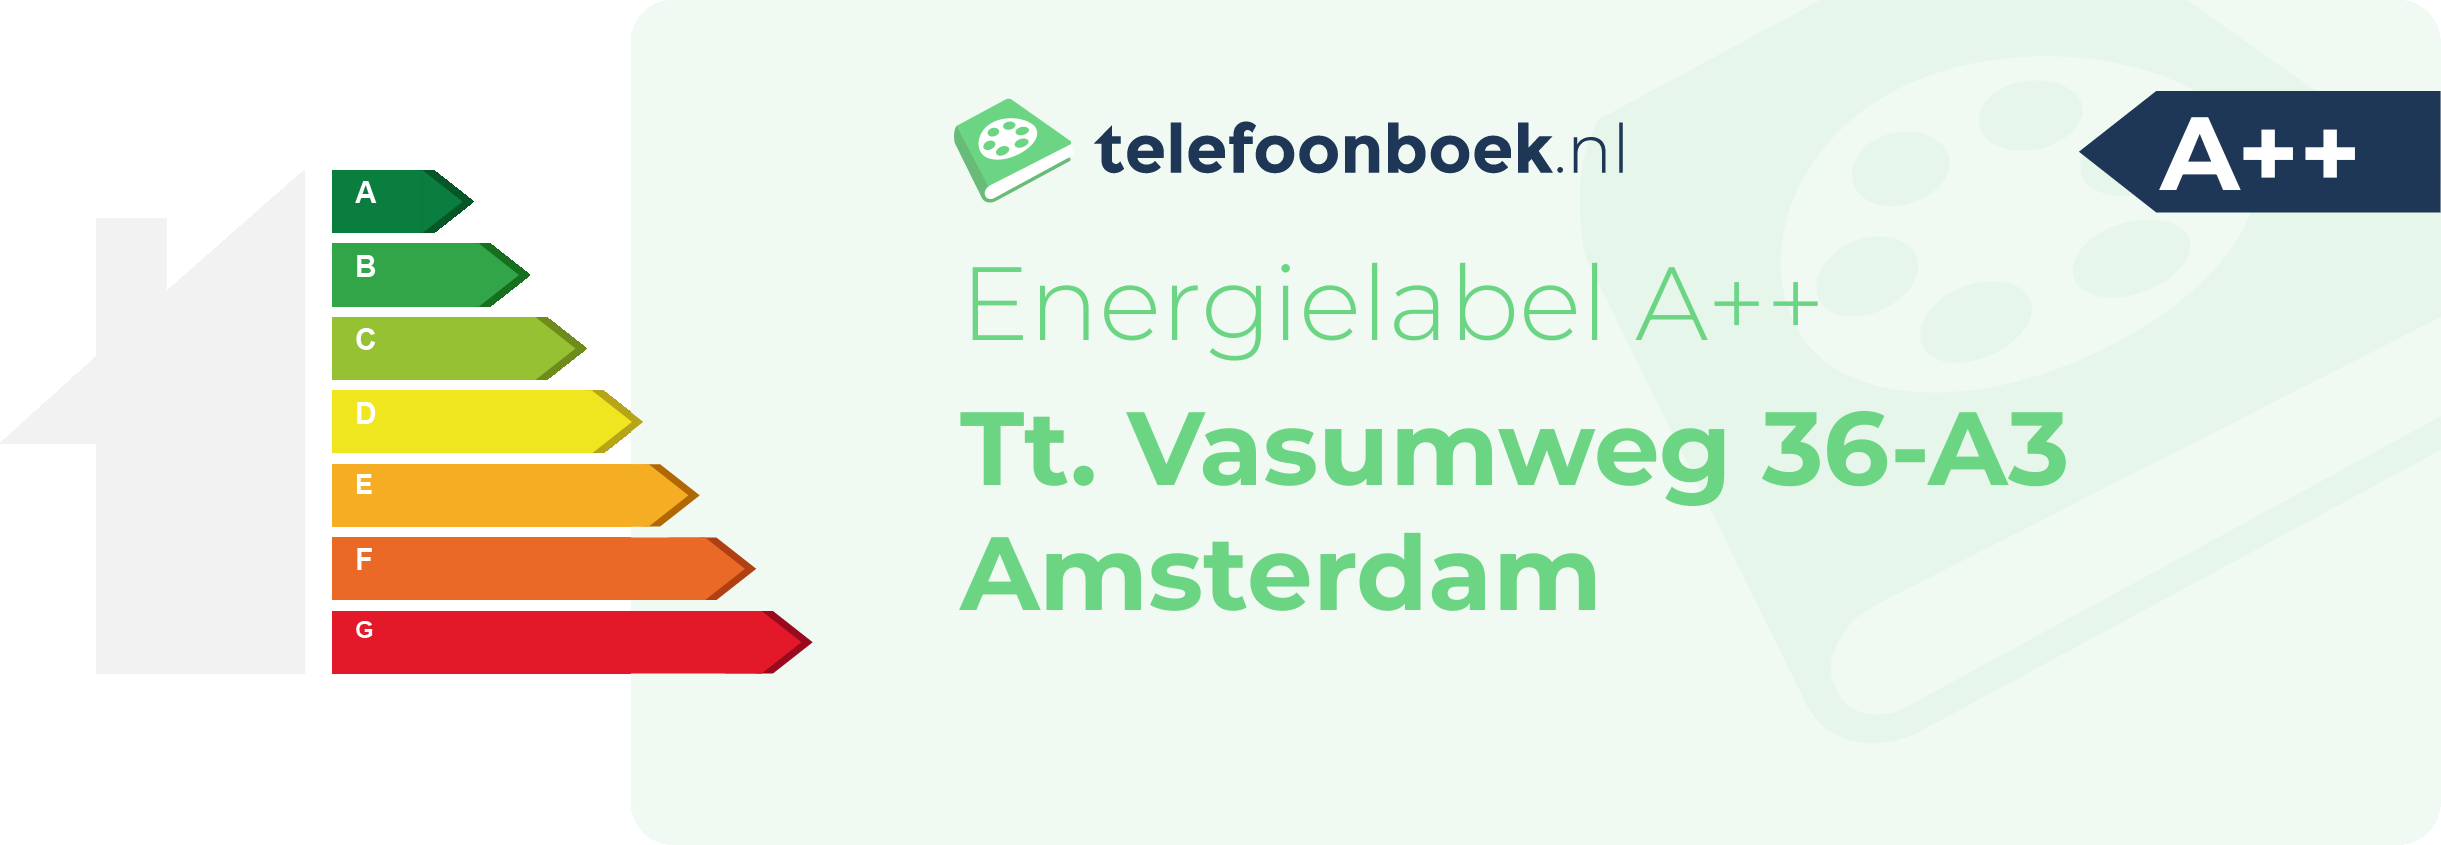 Energielabel Tt. Vasumweg 36-A3 Amsterdam